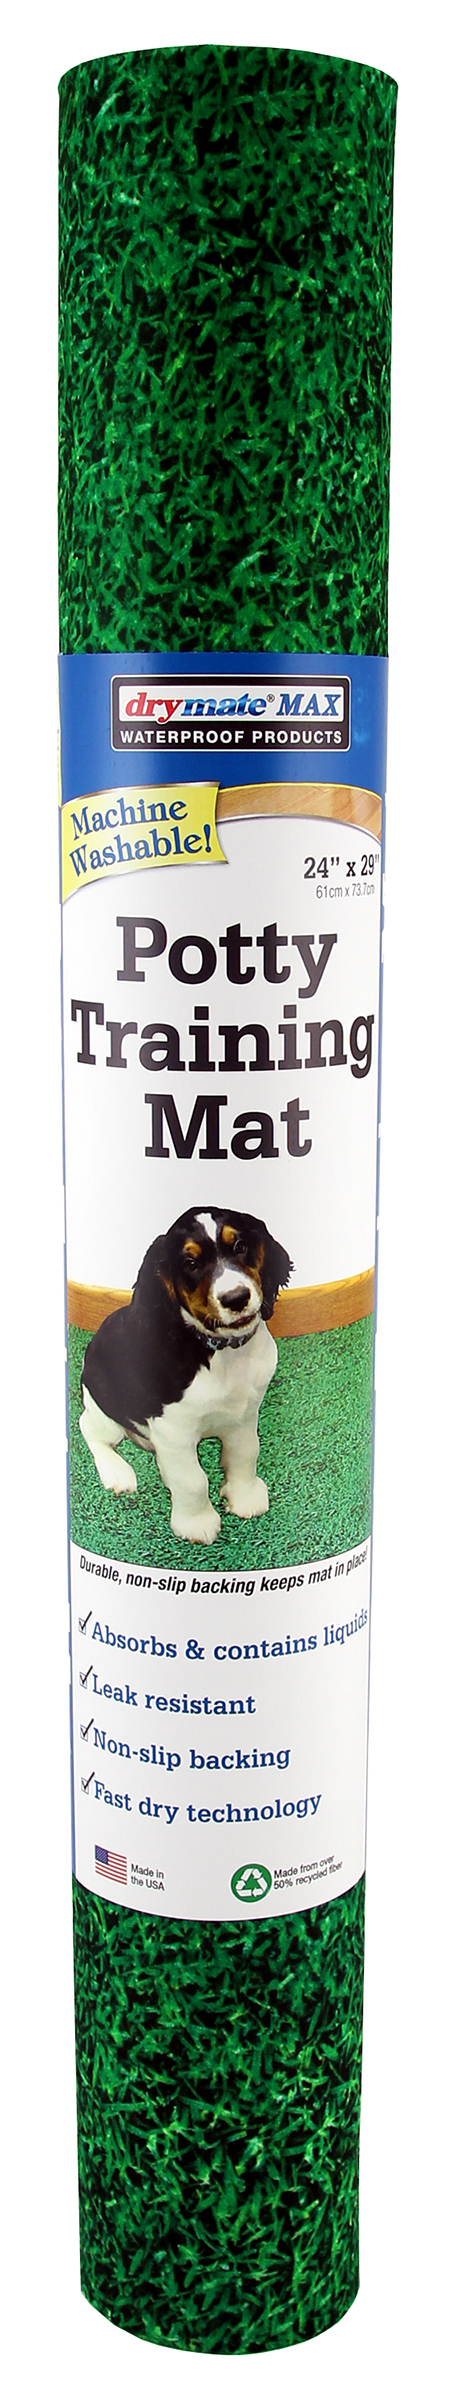 Drymate Washable Potty Pad, Training Mat to Contain Liquids